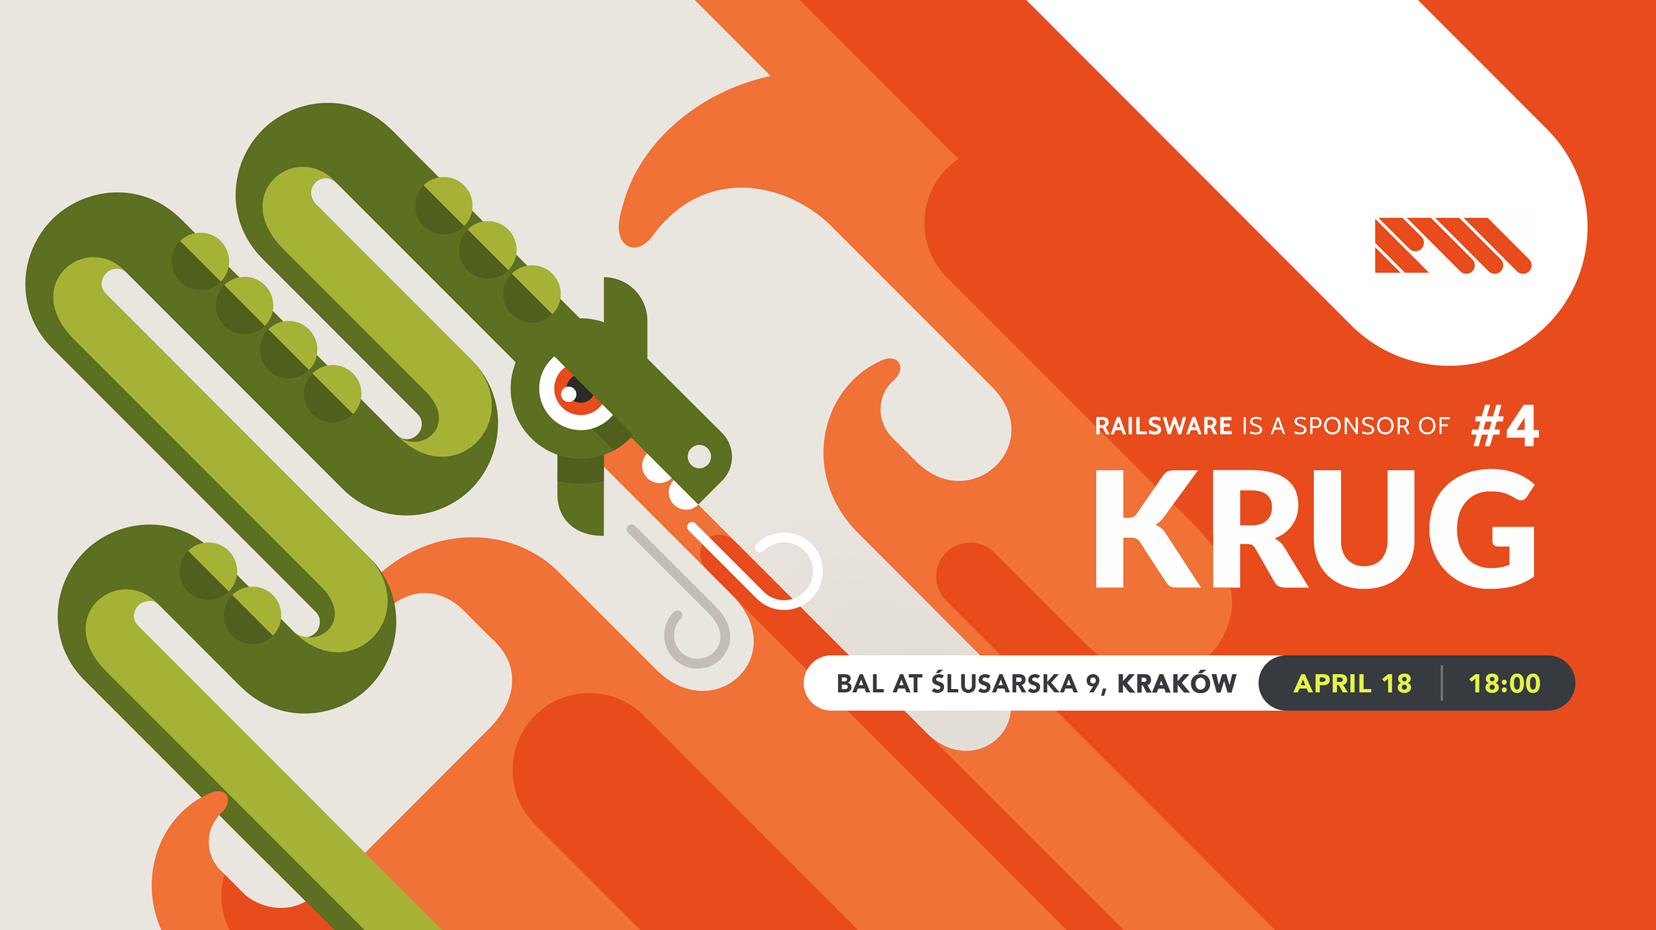 krug-4-2017-powered-by-railsware